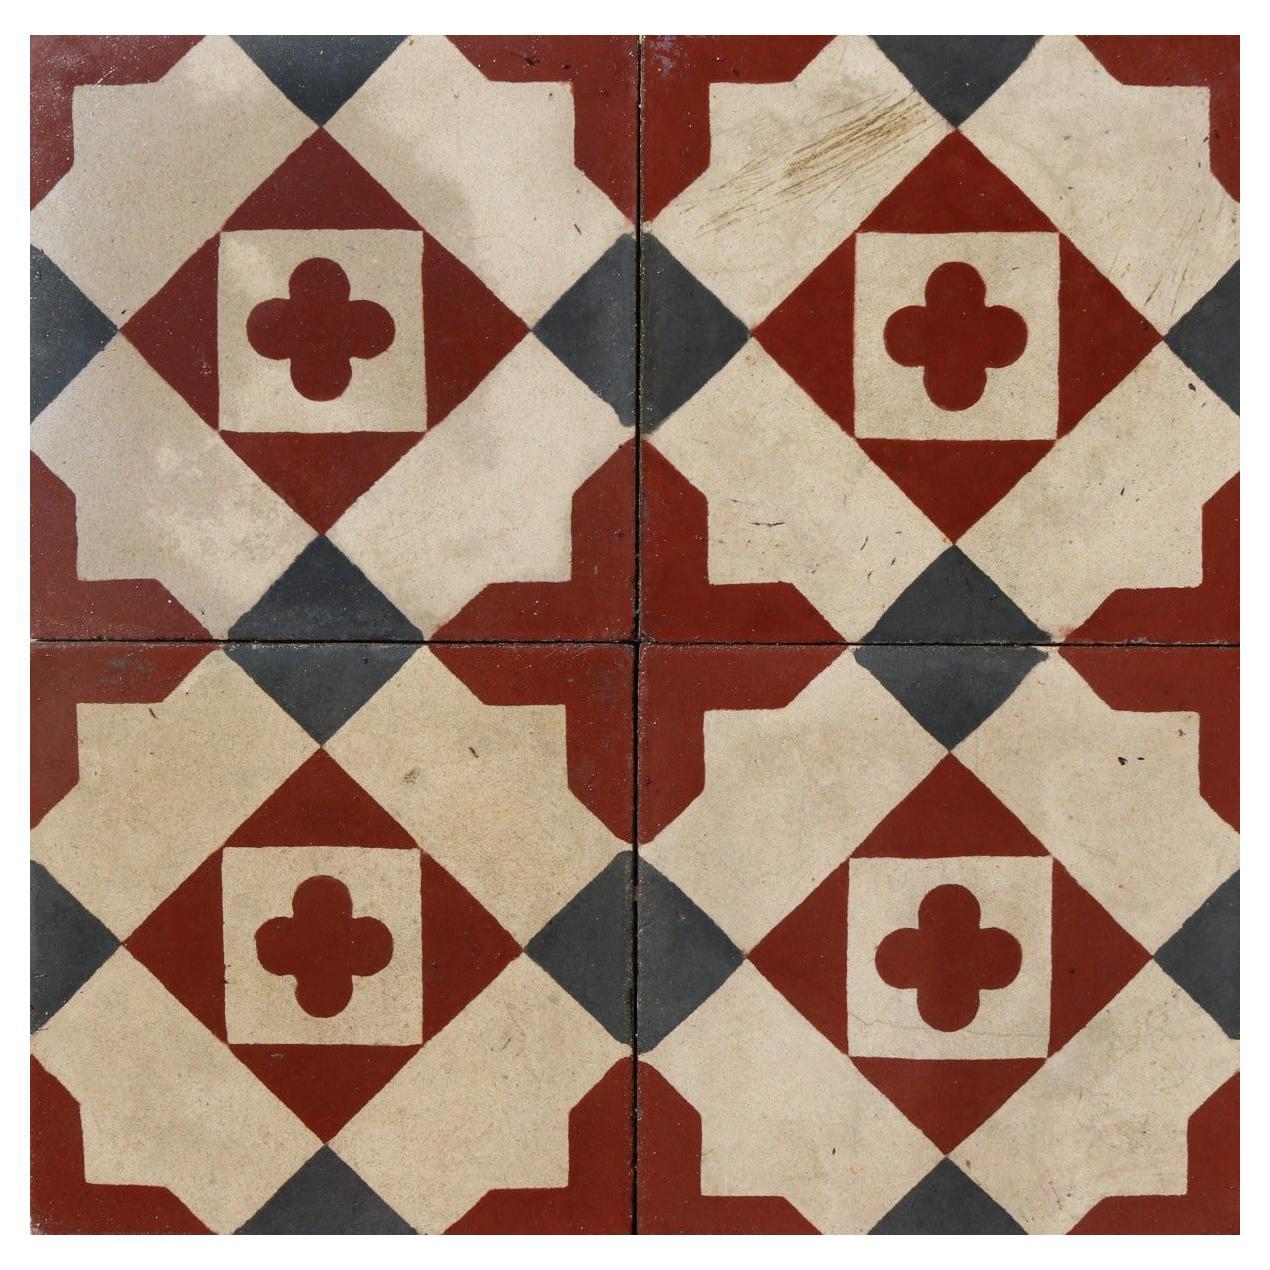 Reclaimed Floor Tiles For Sale